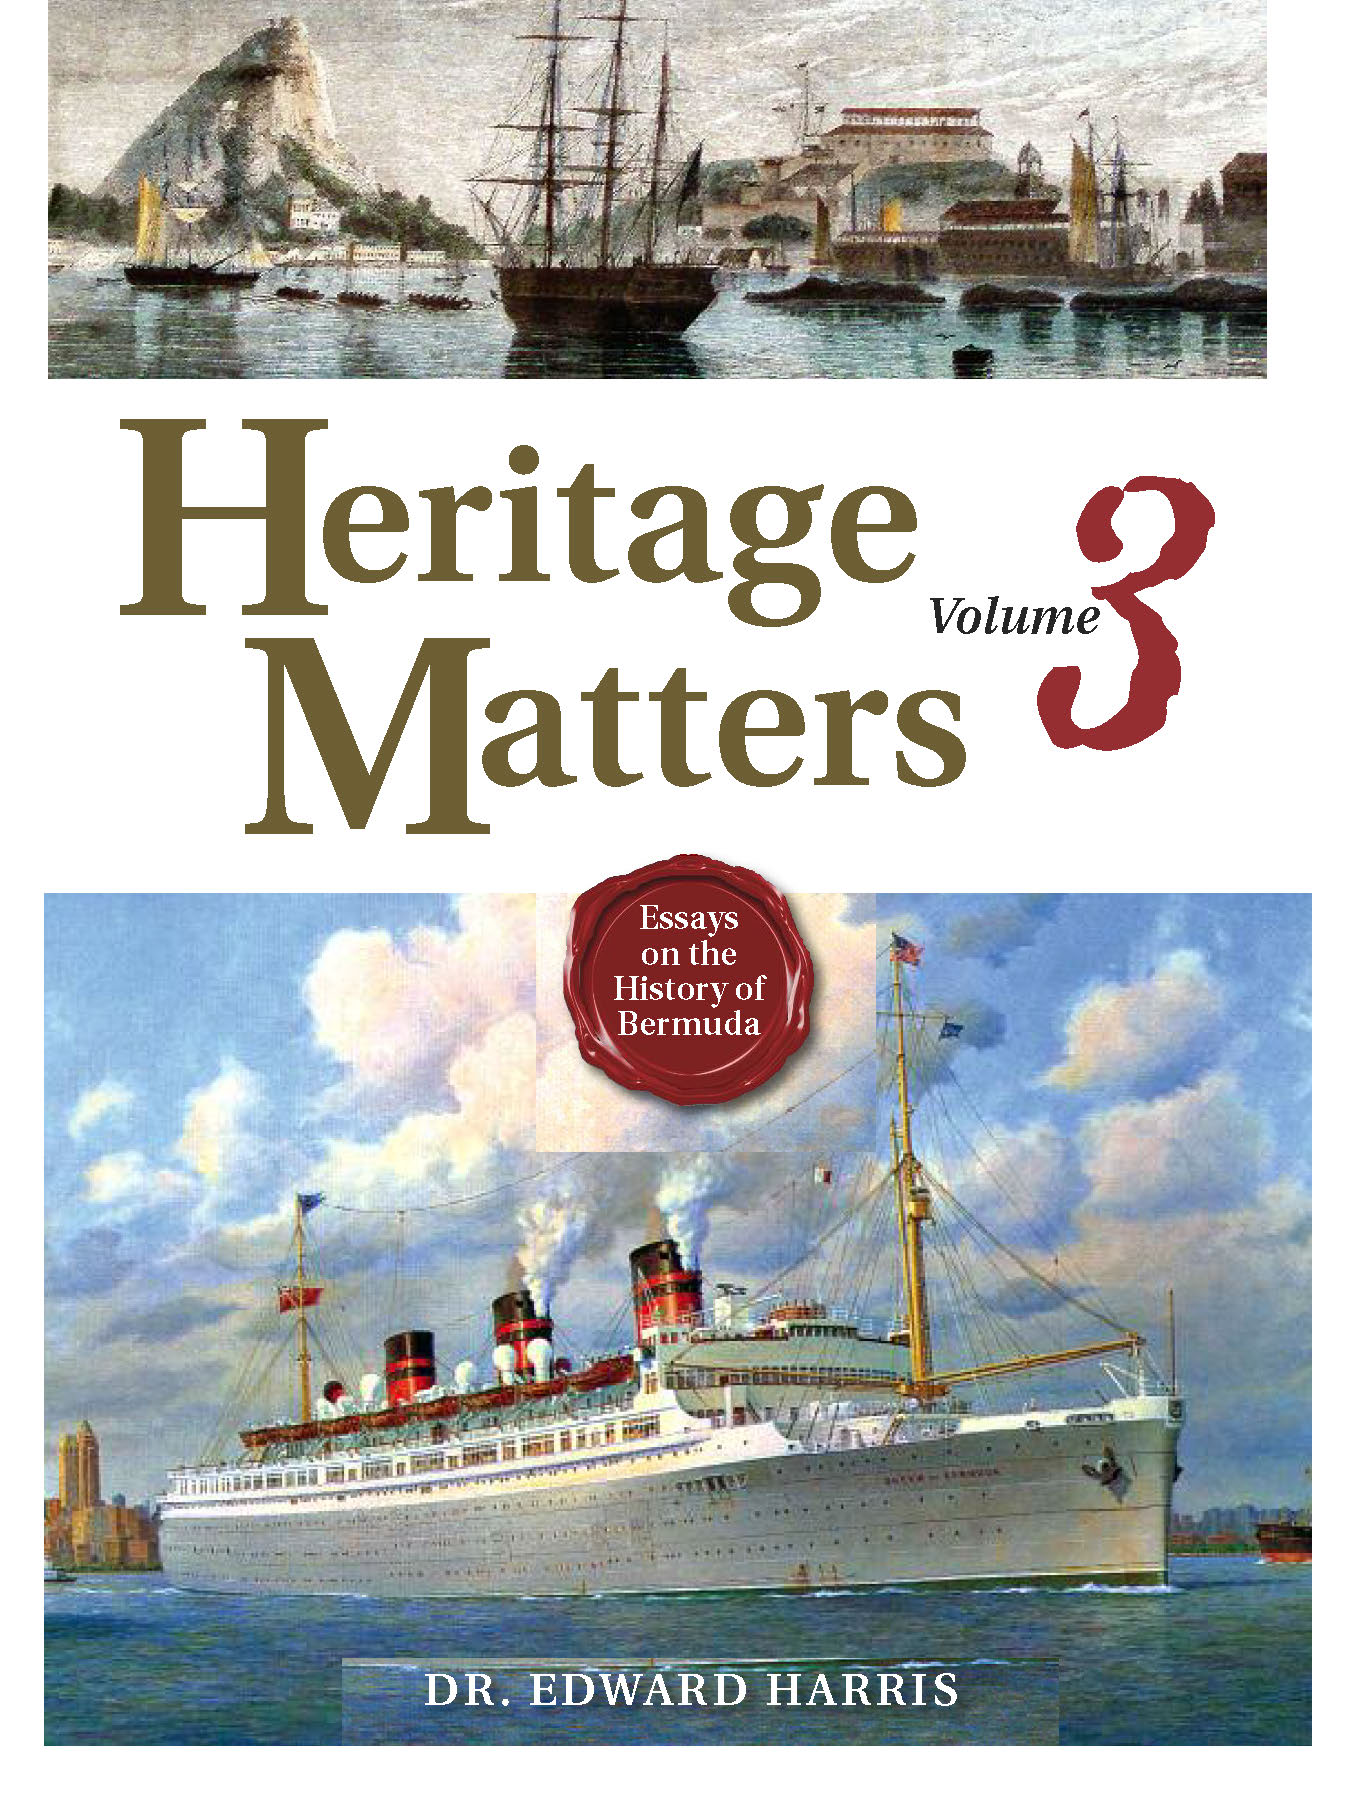 Heritage Matters Volume 3